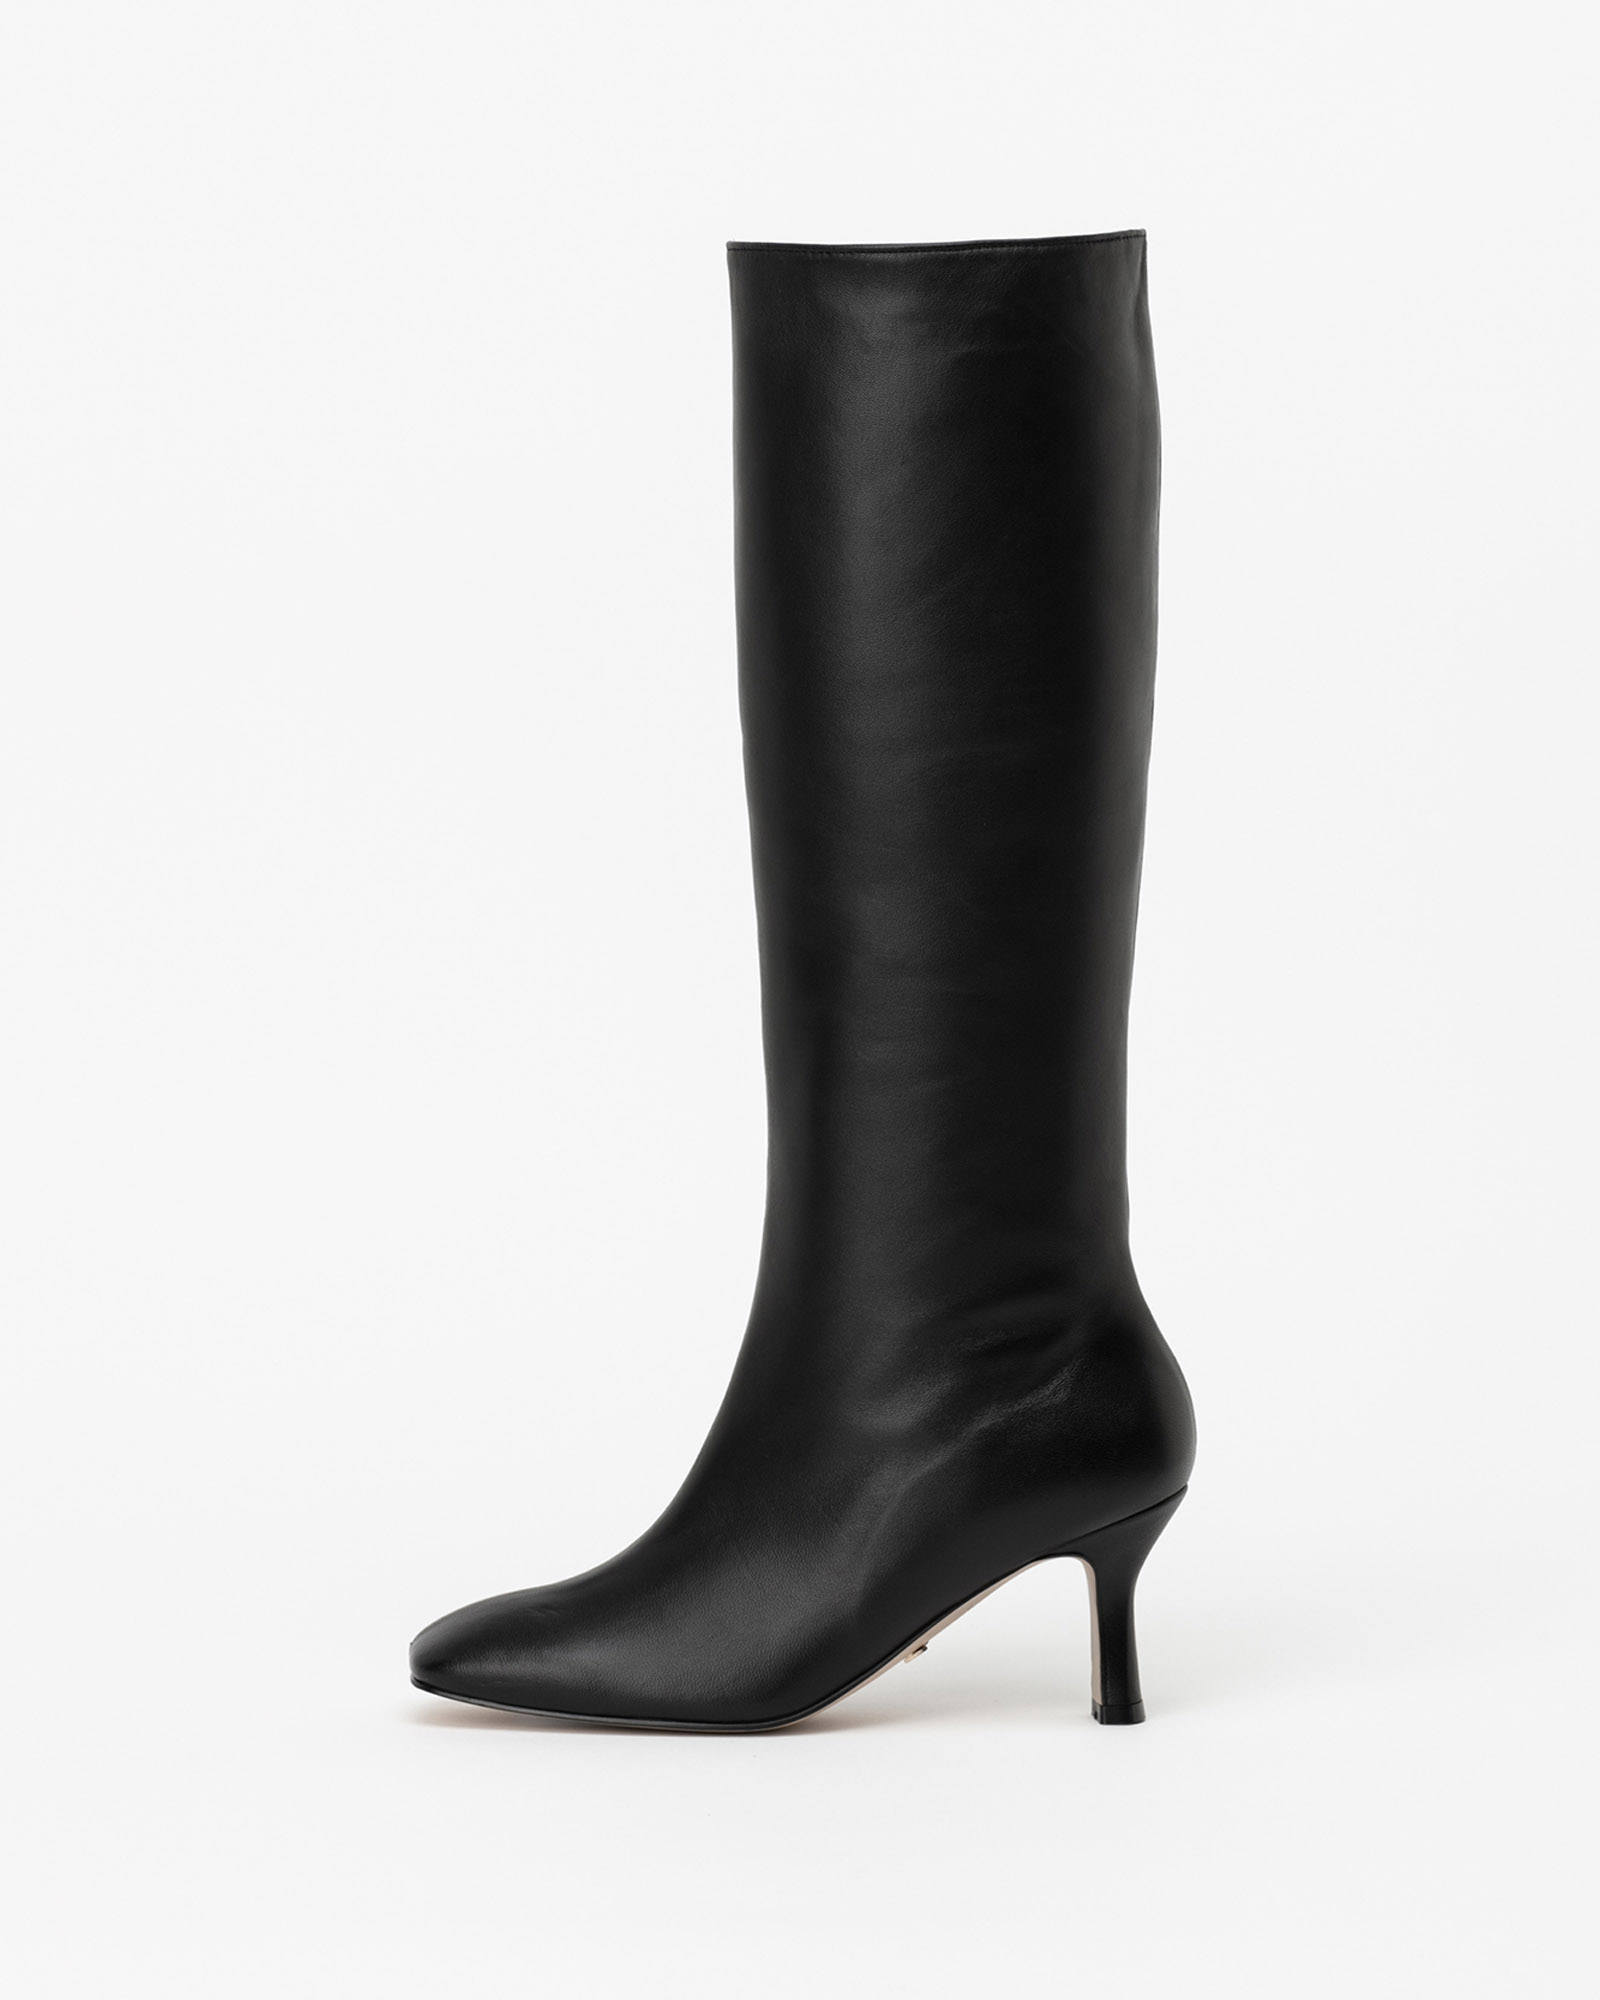 Marella Long Boots in Black